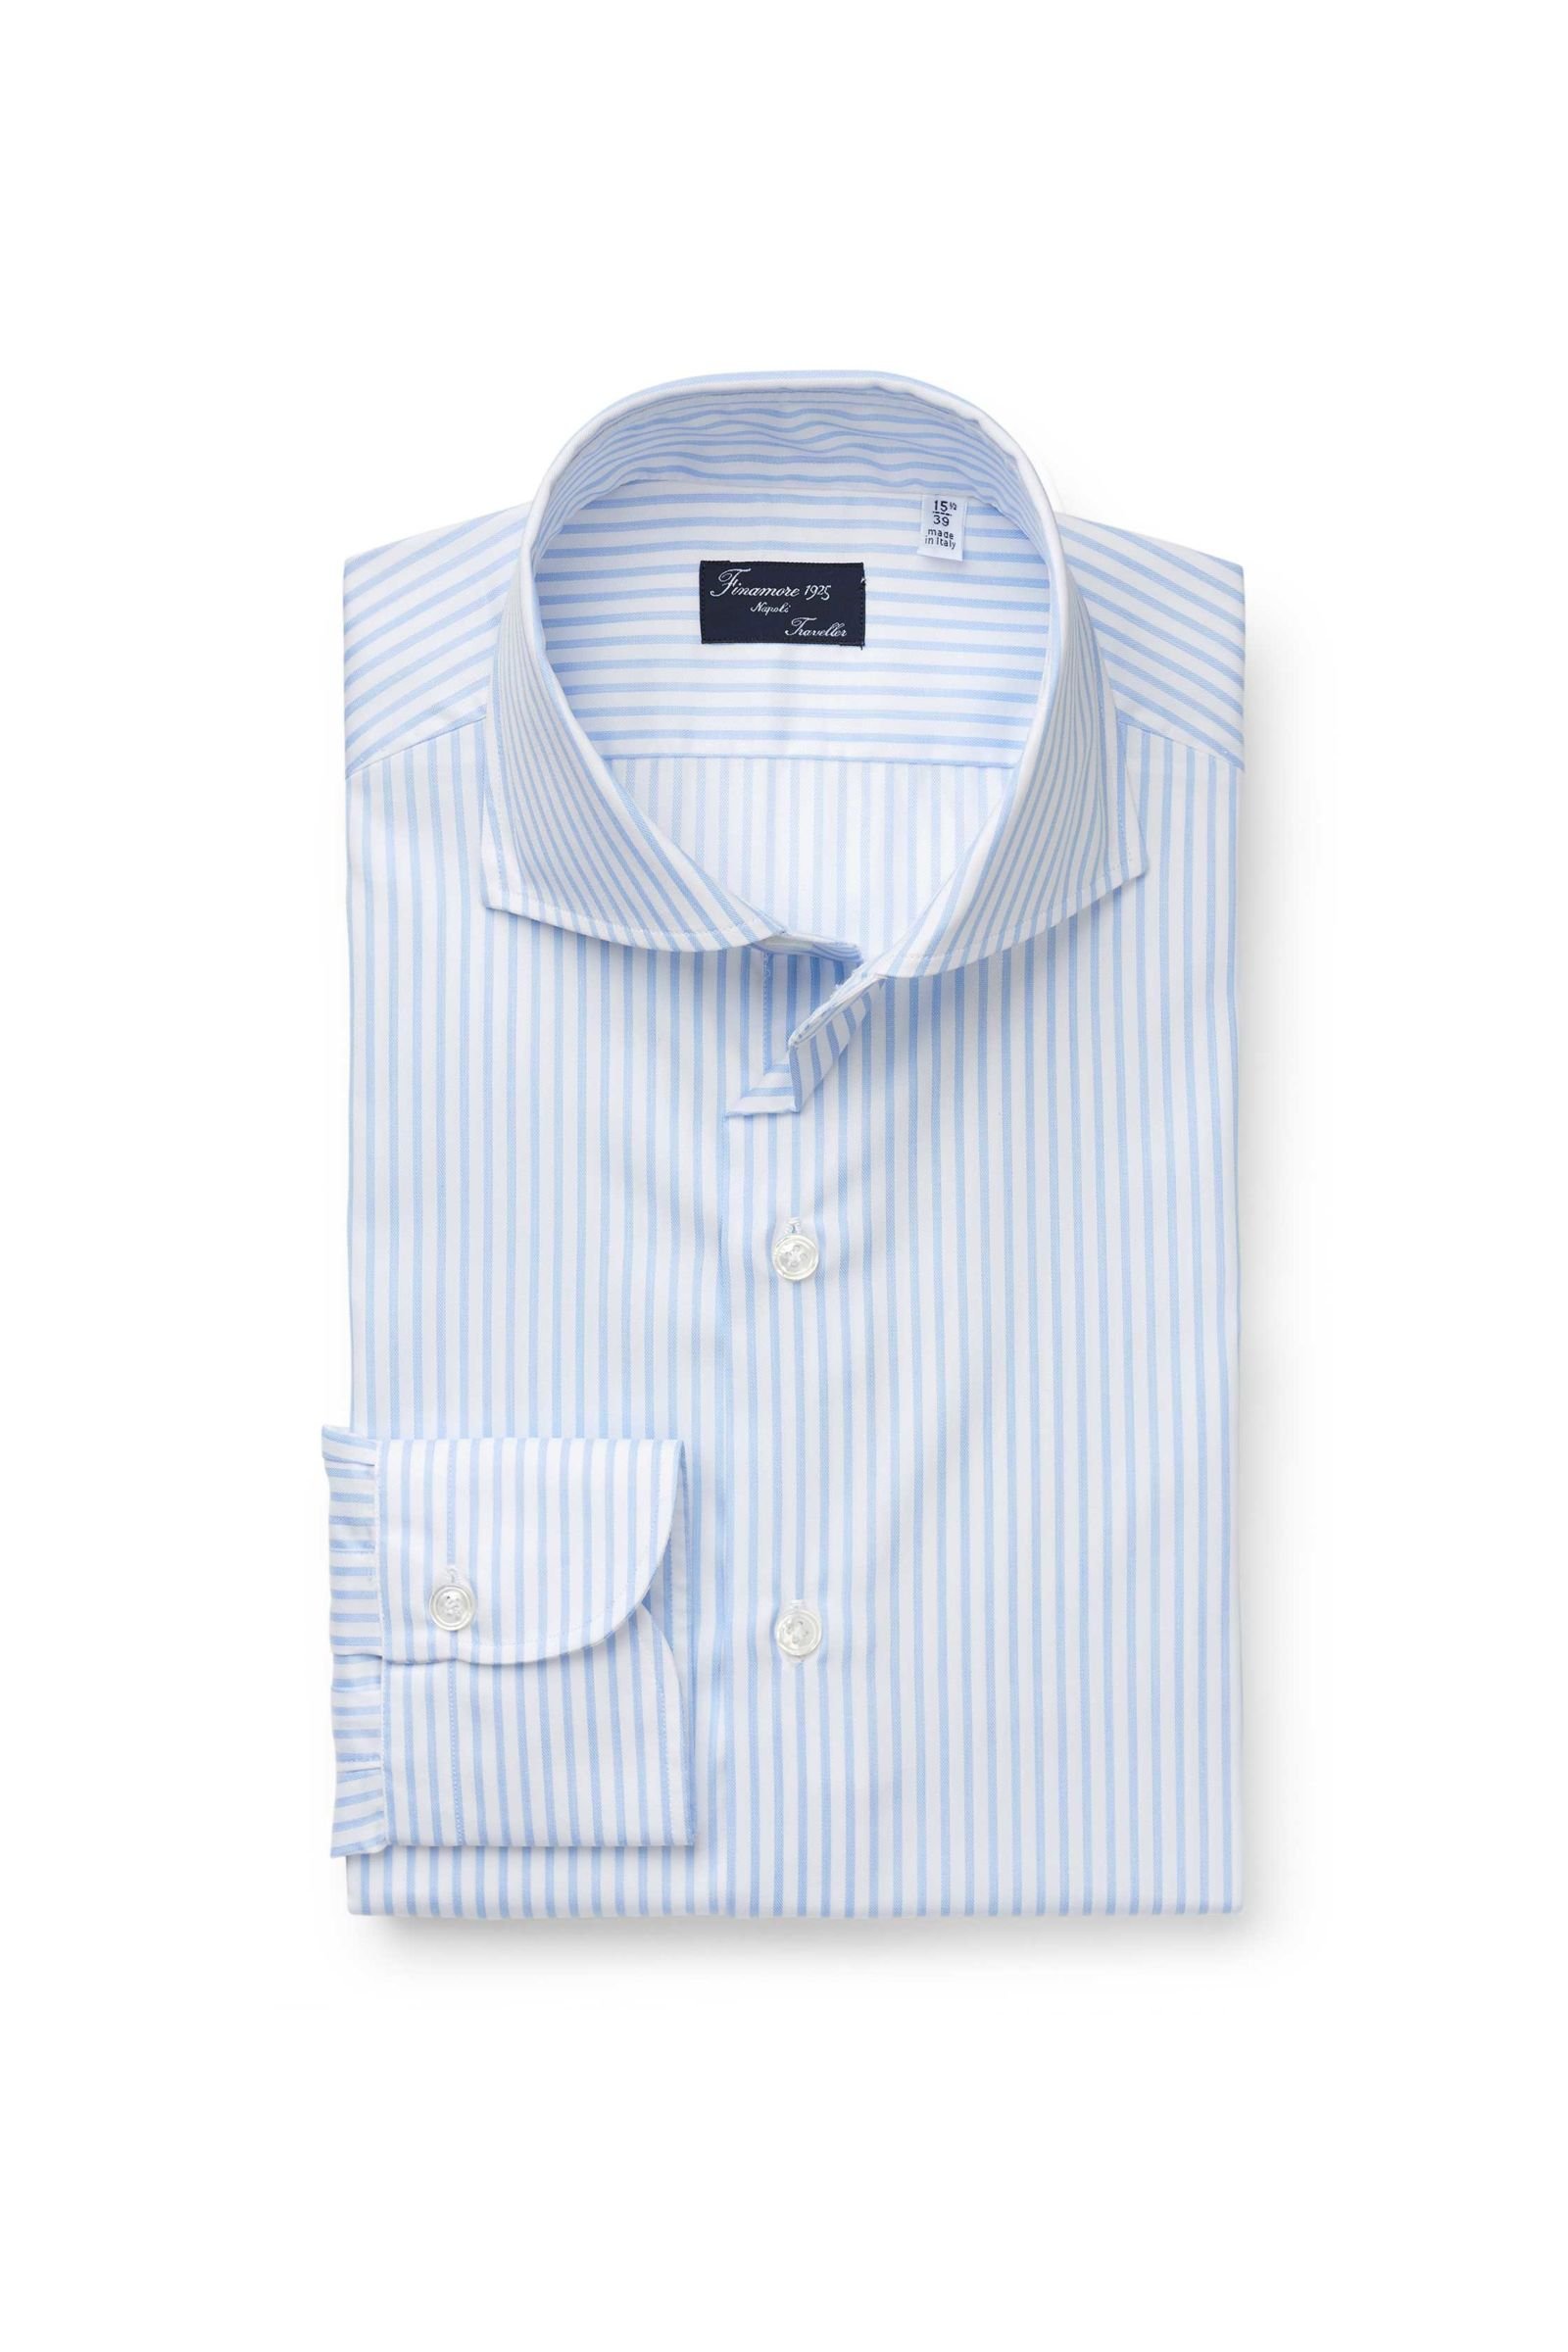 Business shirt 'Eduardo Napoli' shark collar pastel blue/white striped